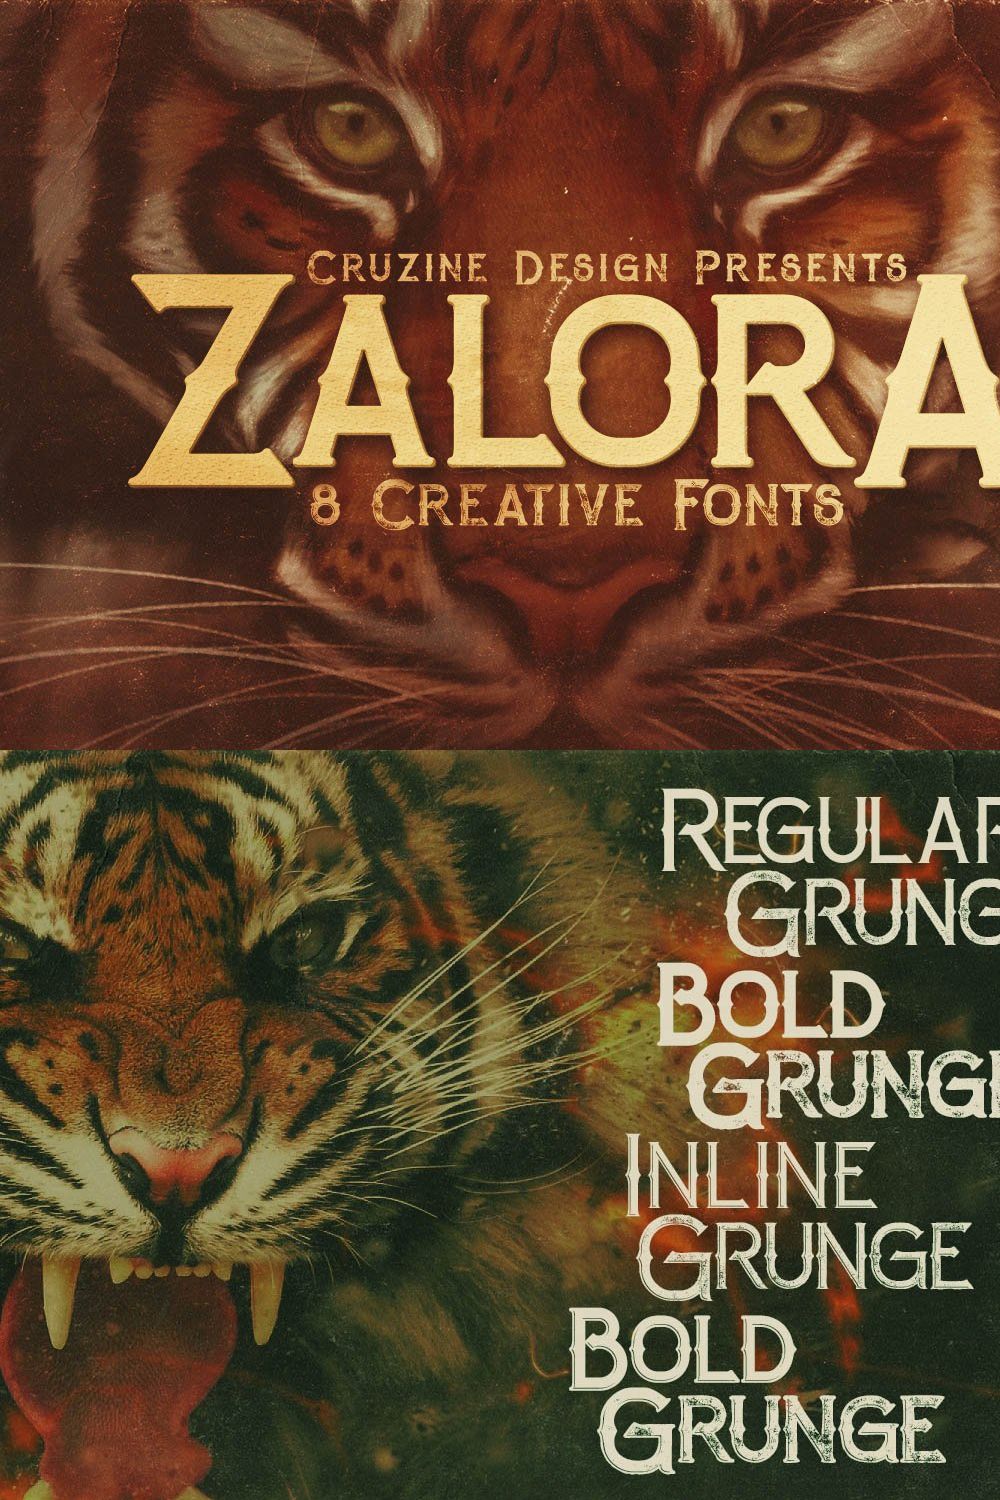 Zalora Typeface pinterest preview image.